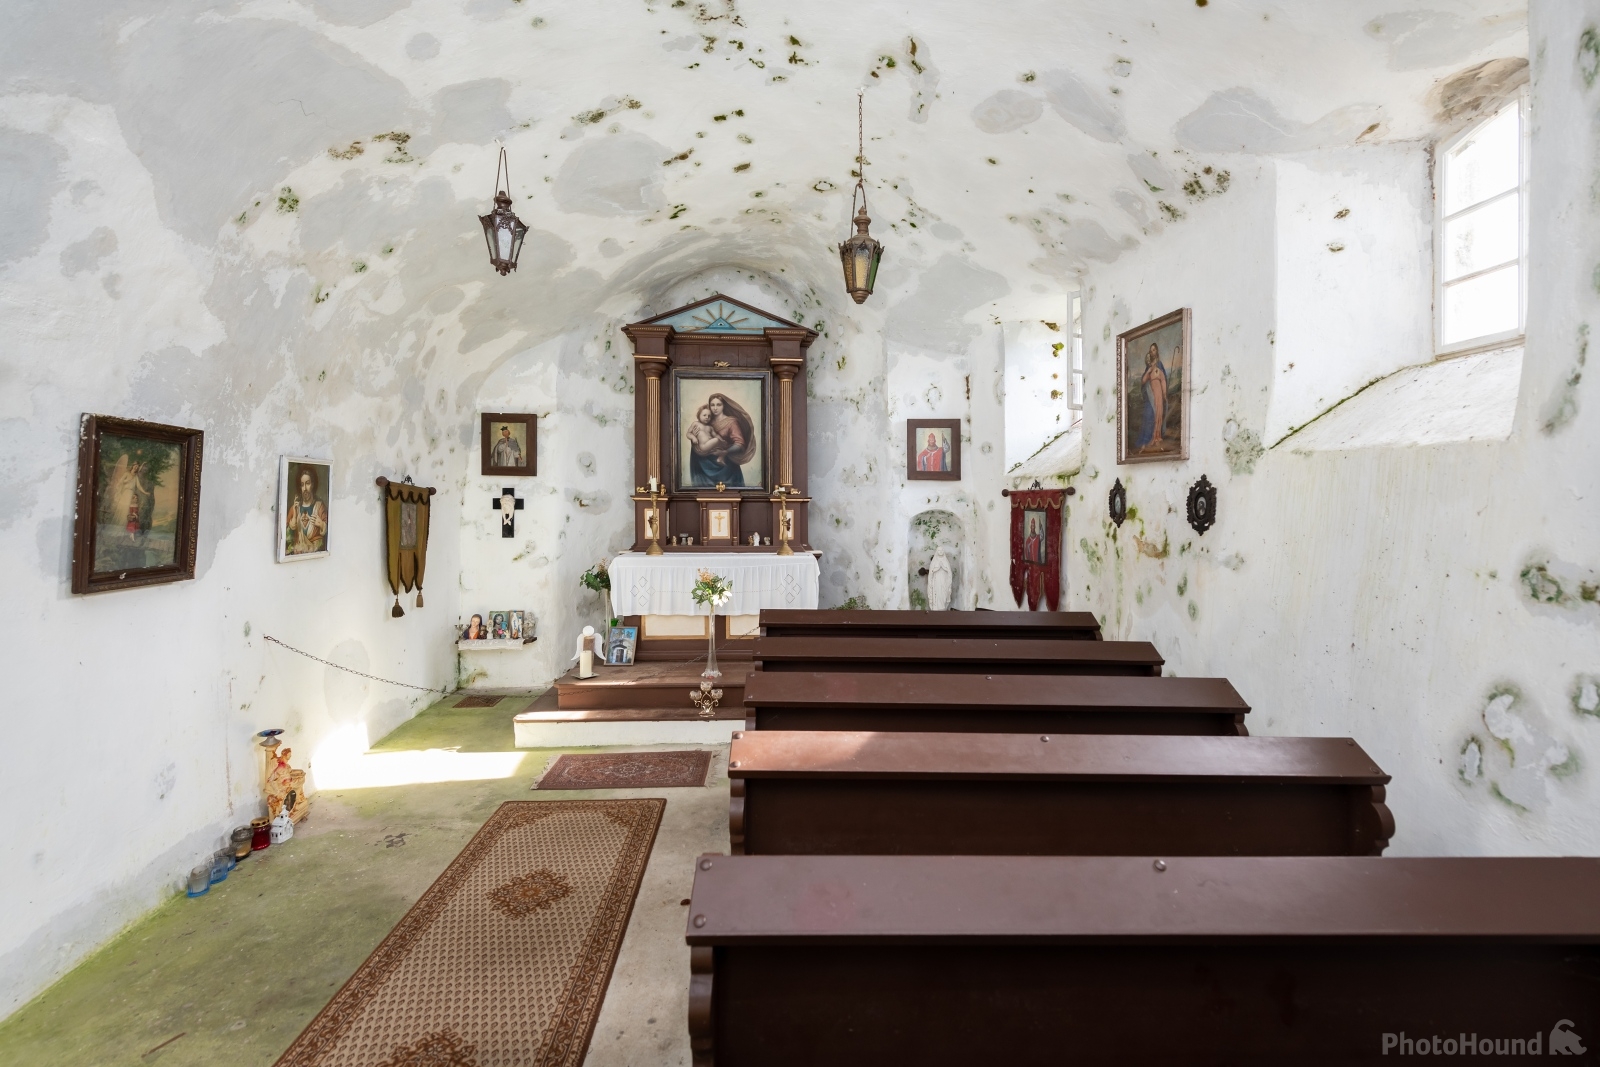 Image of St Ignatius Rock Chapel by VOJTa Herout